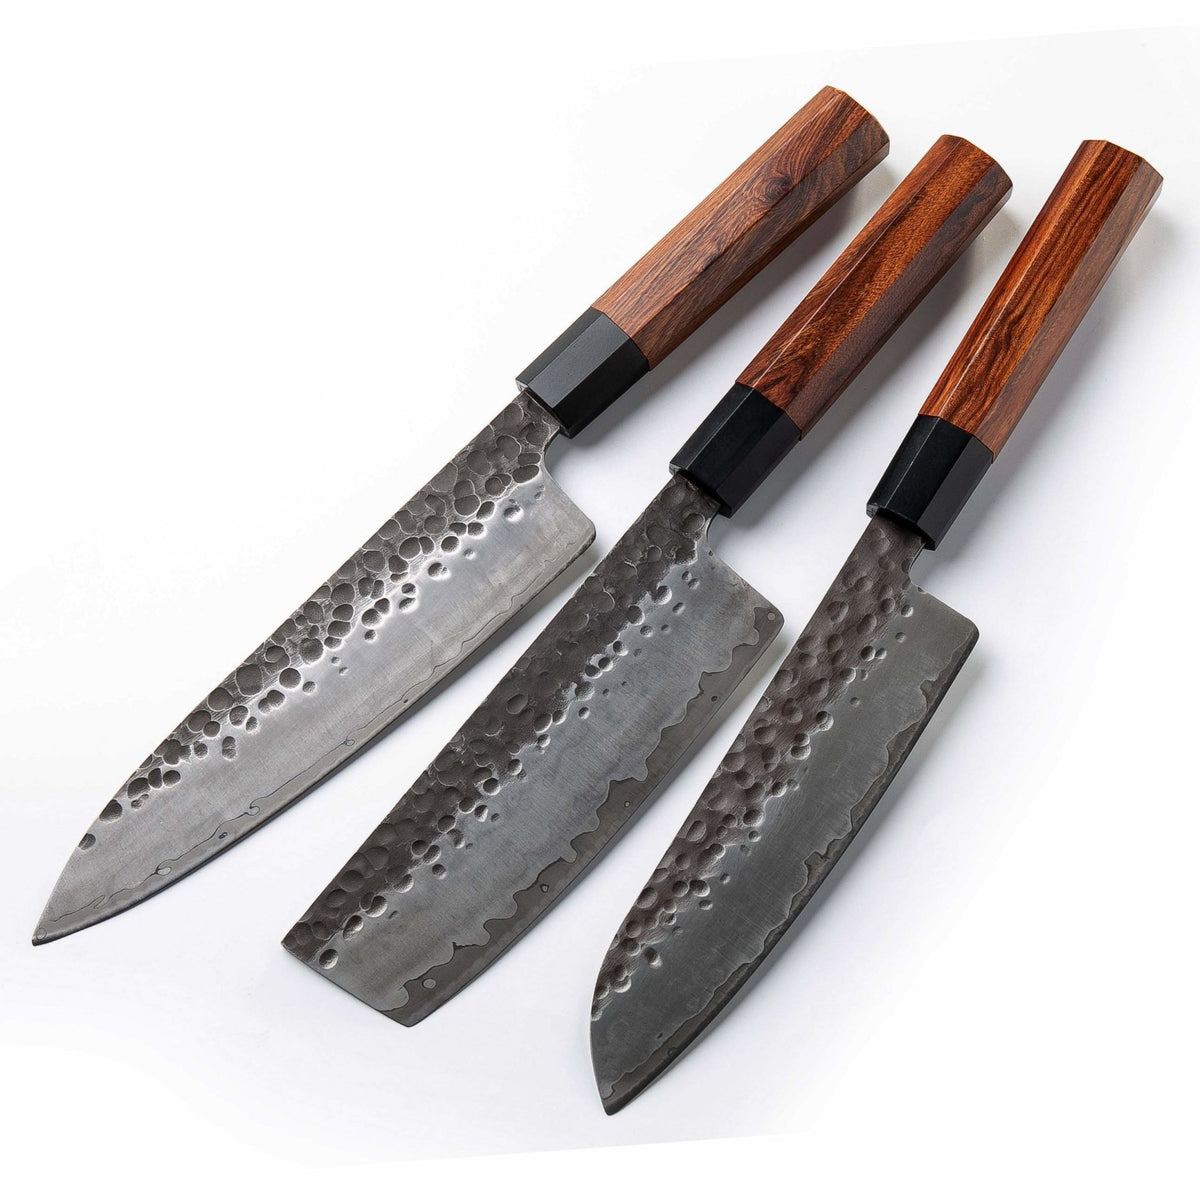 Professional Kitchen Knives Set with Knife Gift Case Sharp Chef Knife Sushi Knife  Japanese Knife Fruit